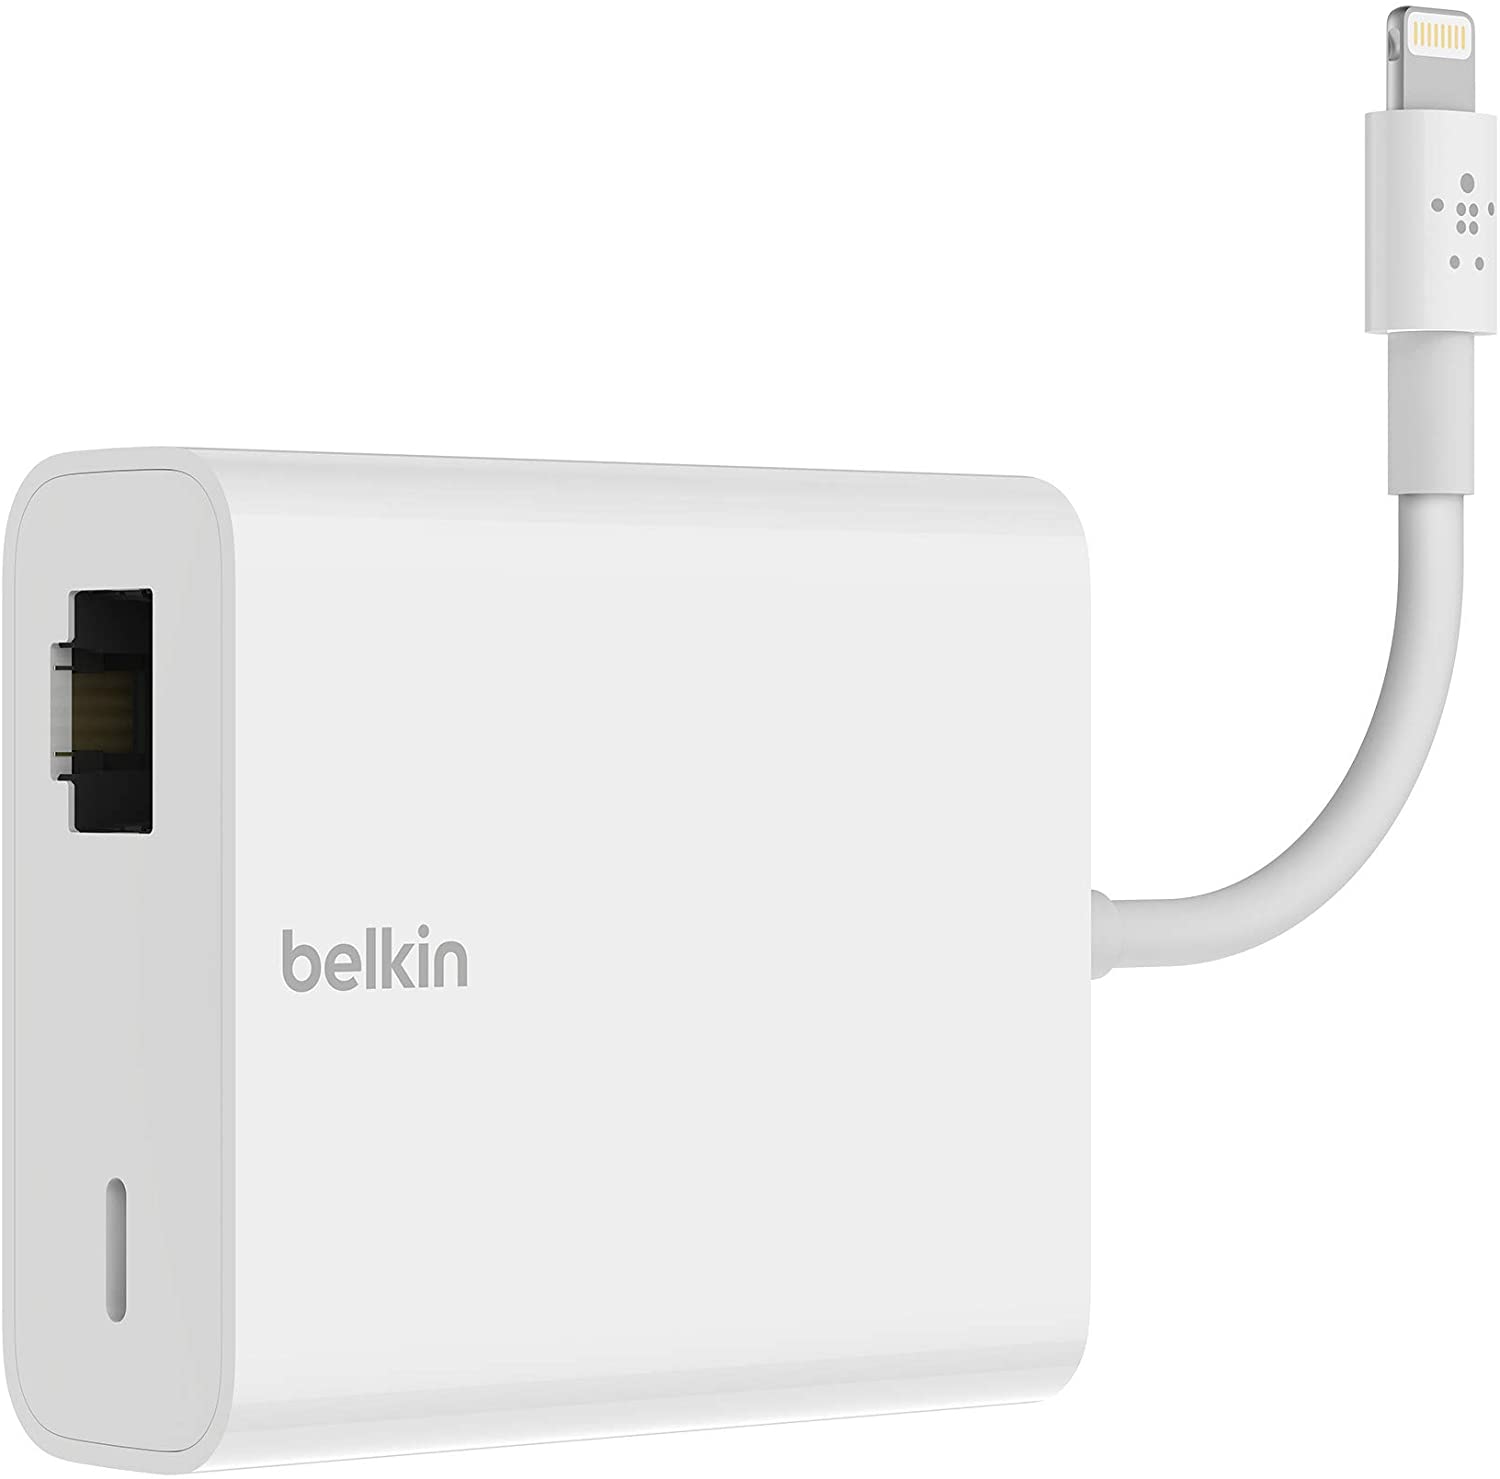 Belkin Belkin Ethernet + Power Adapter with Lightning Connector